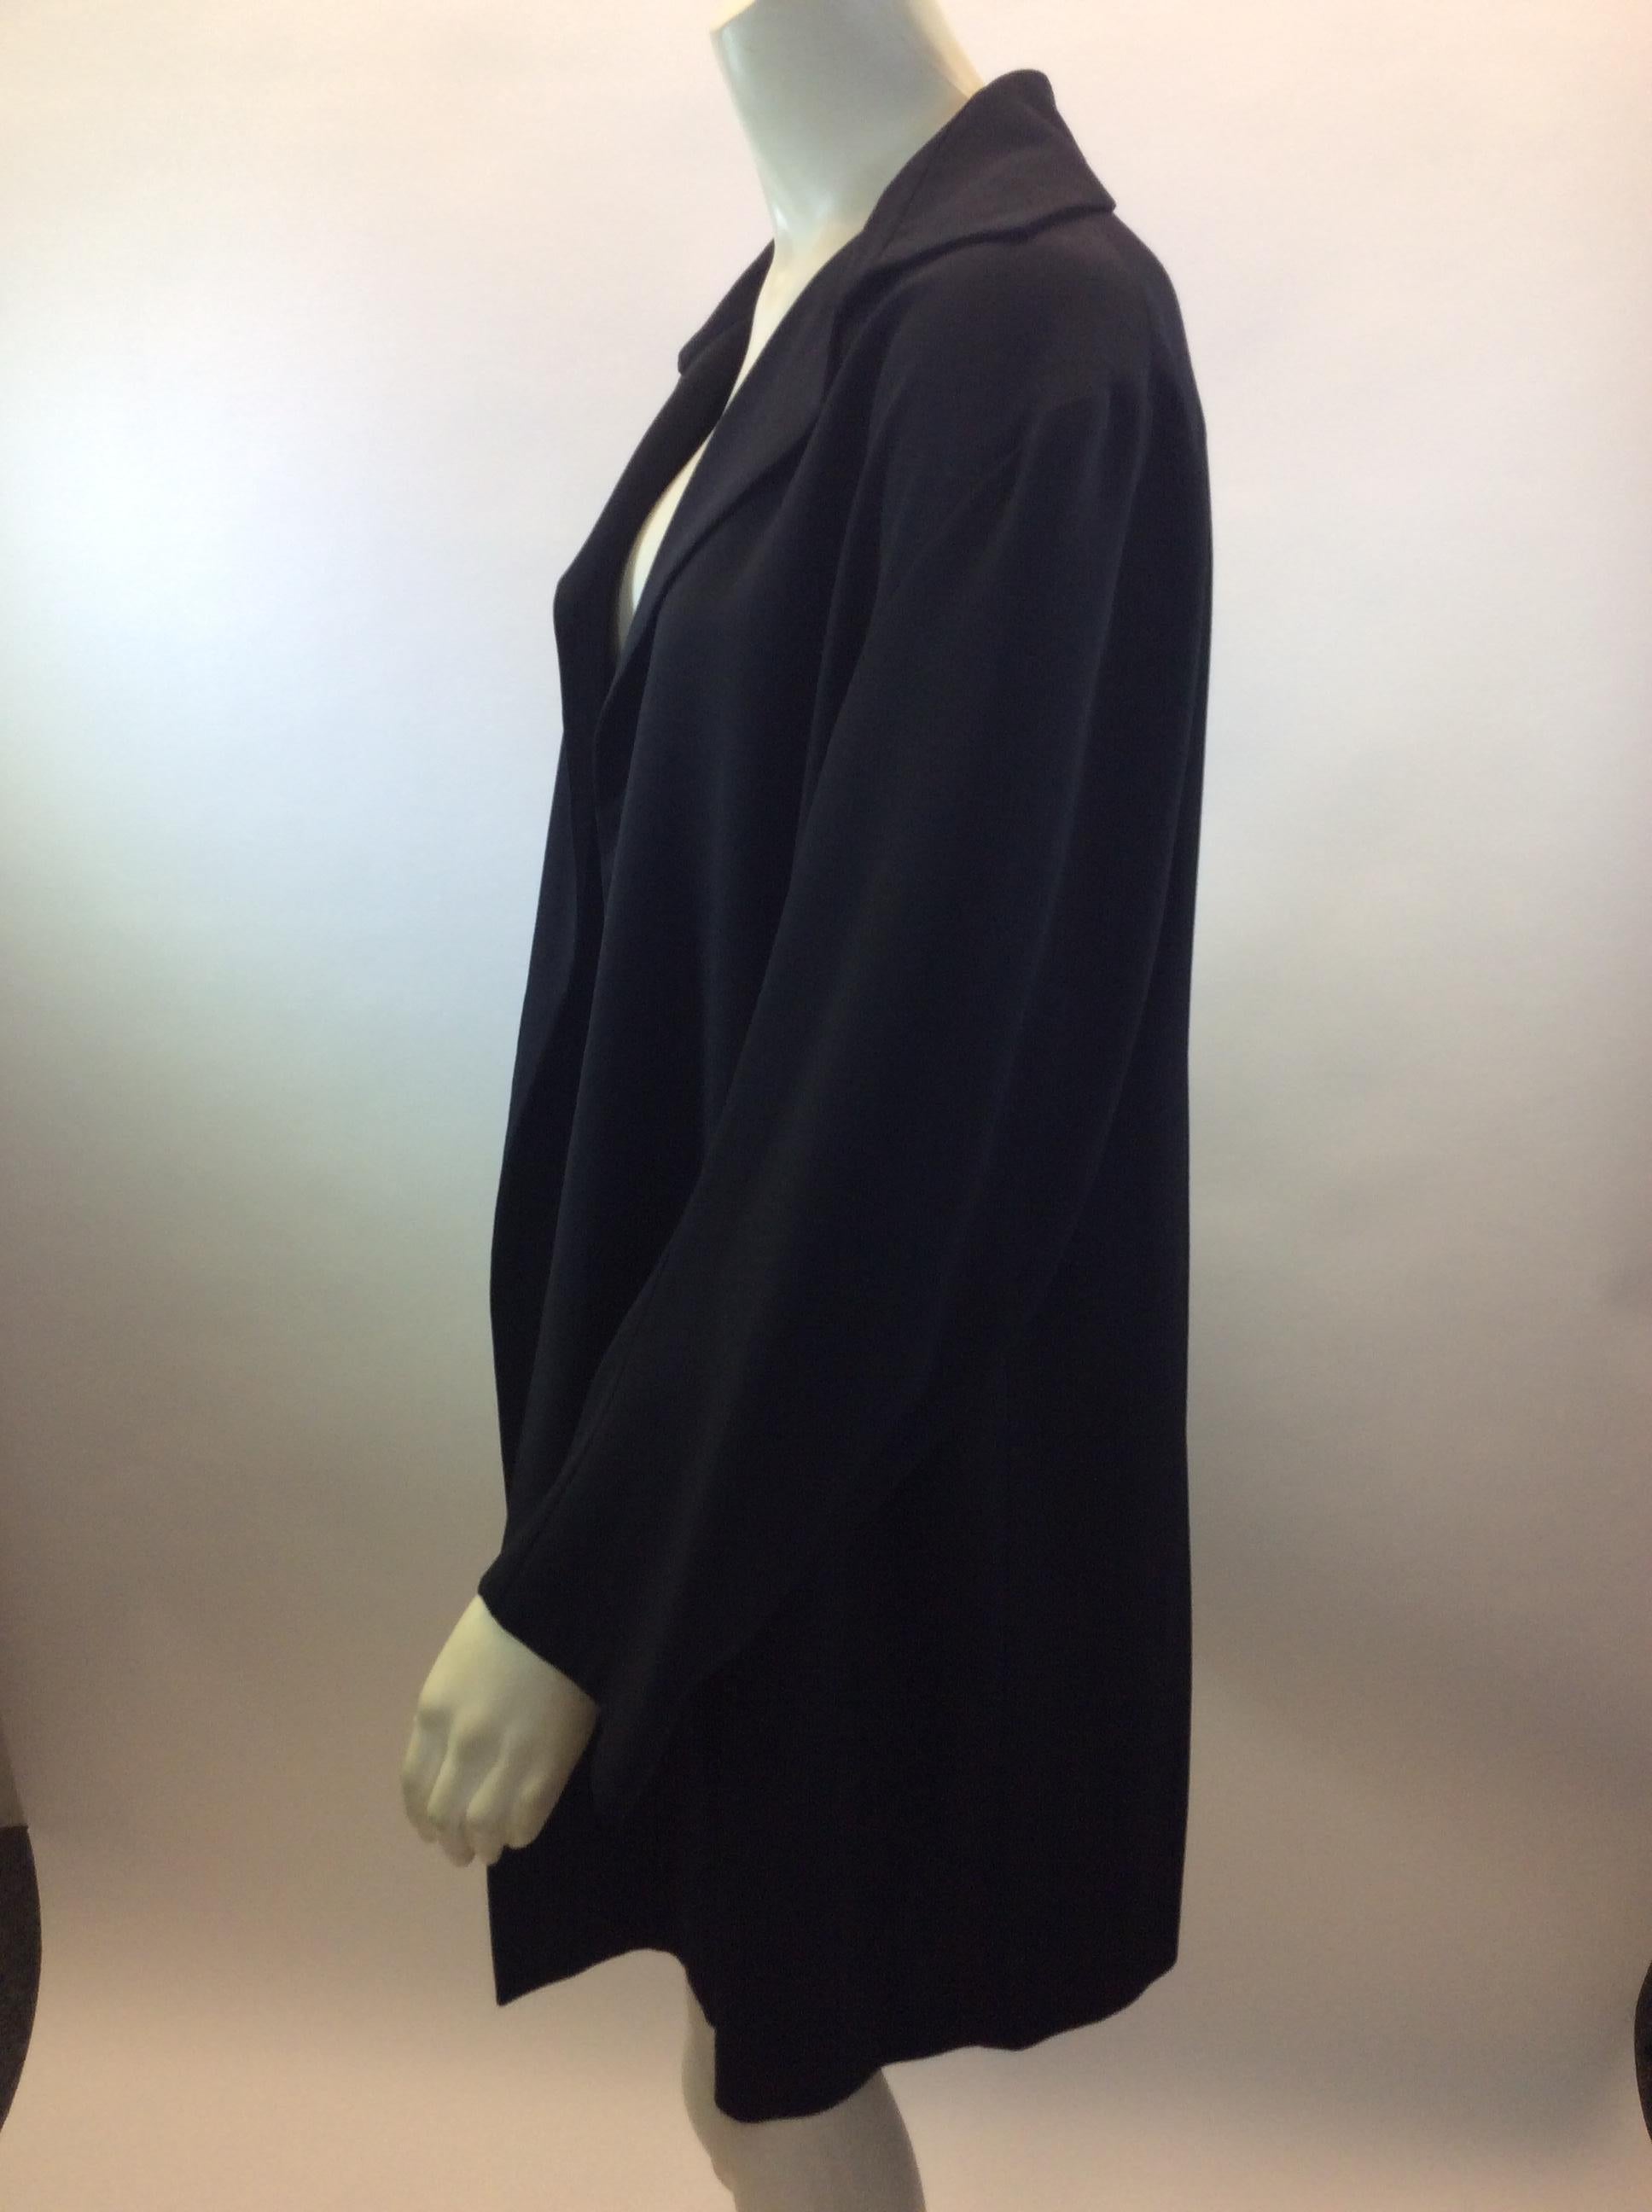 Yohji Yamamoto Black Jacket with Zipper Detail
$399
Made in Japan
100% Wool
Size Medium
Length 34